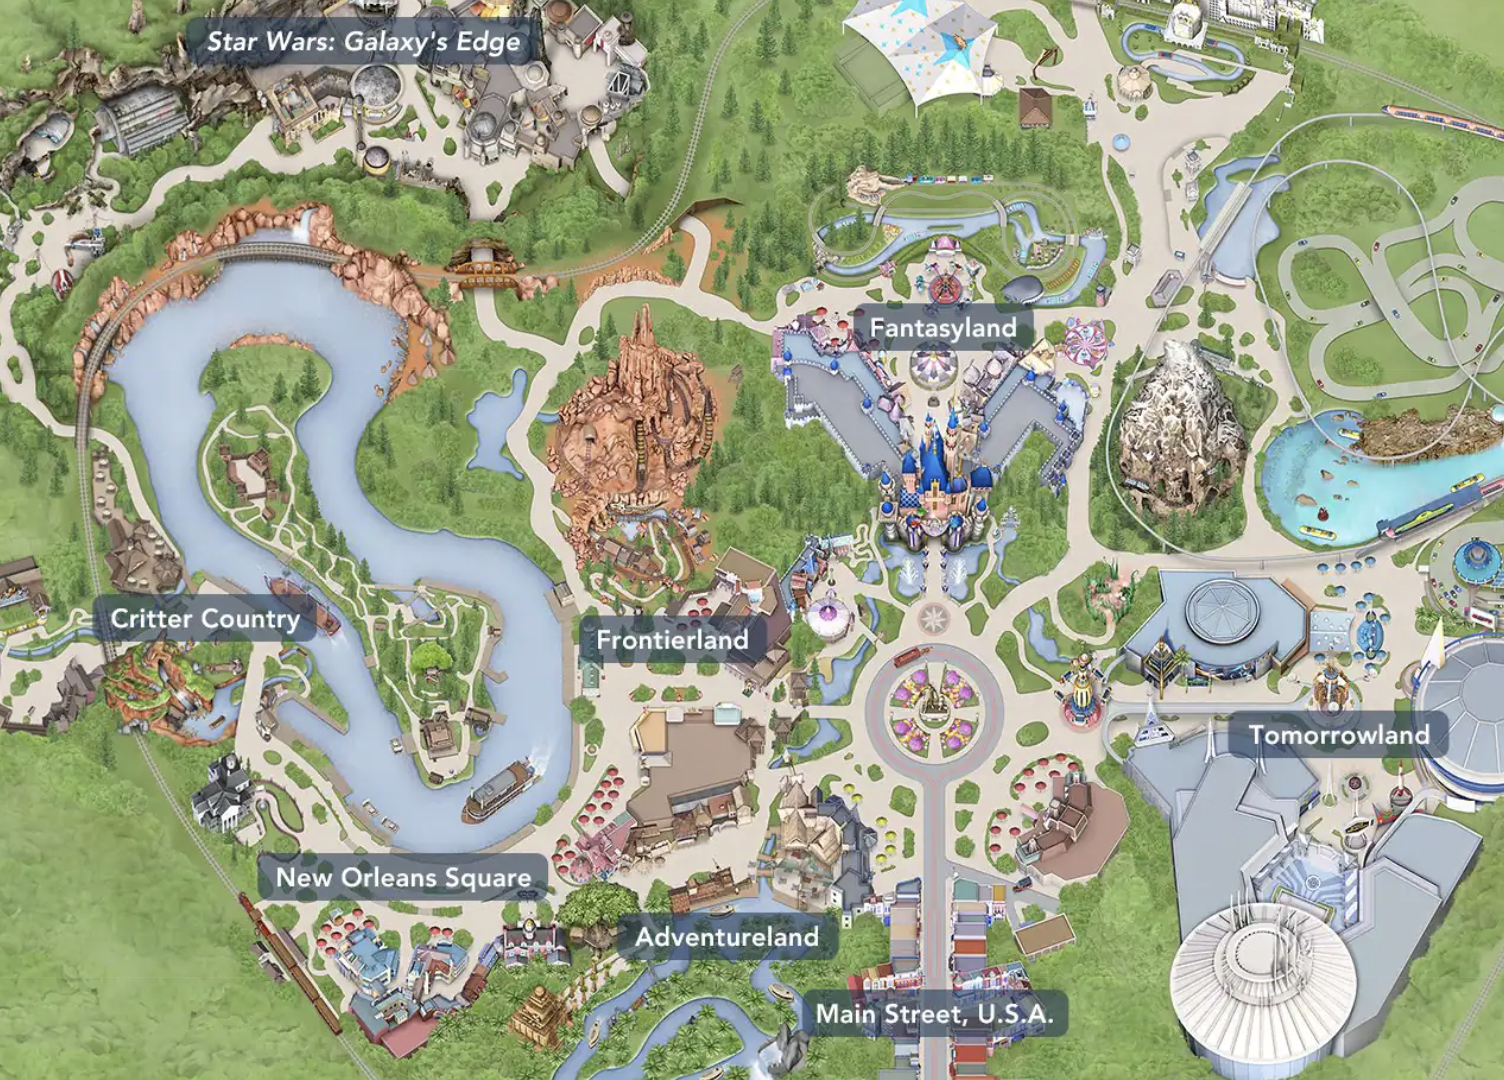 A map of Disneyland